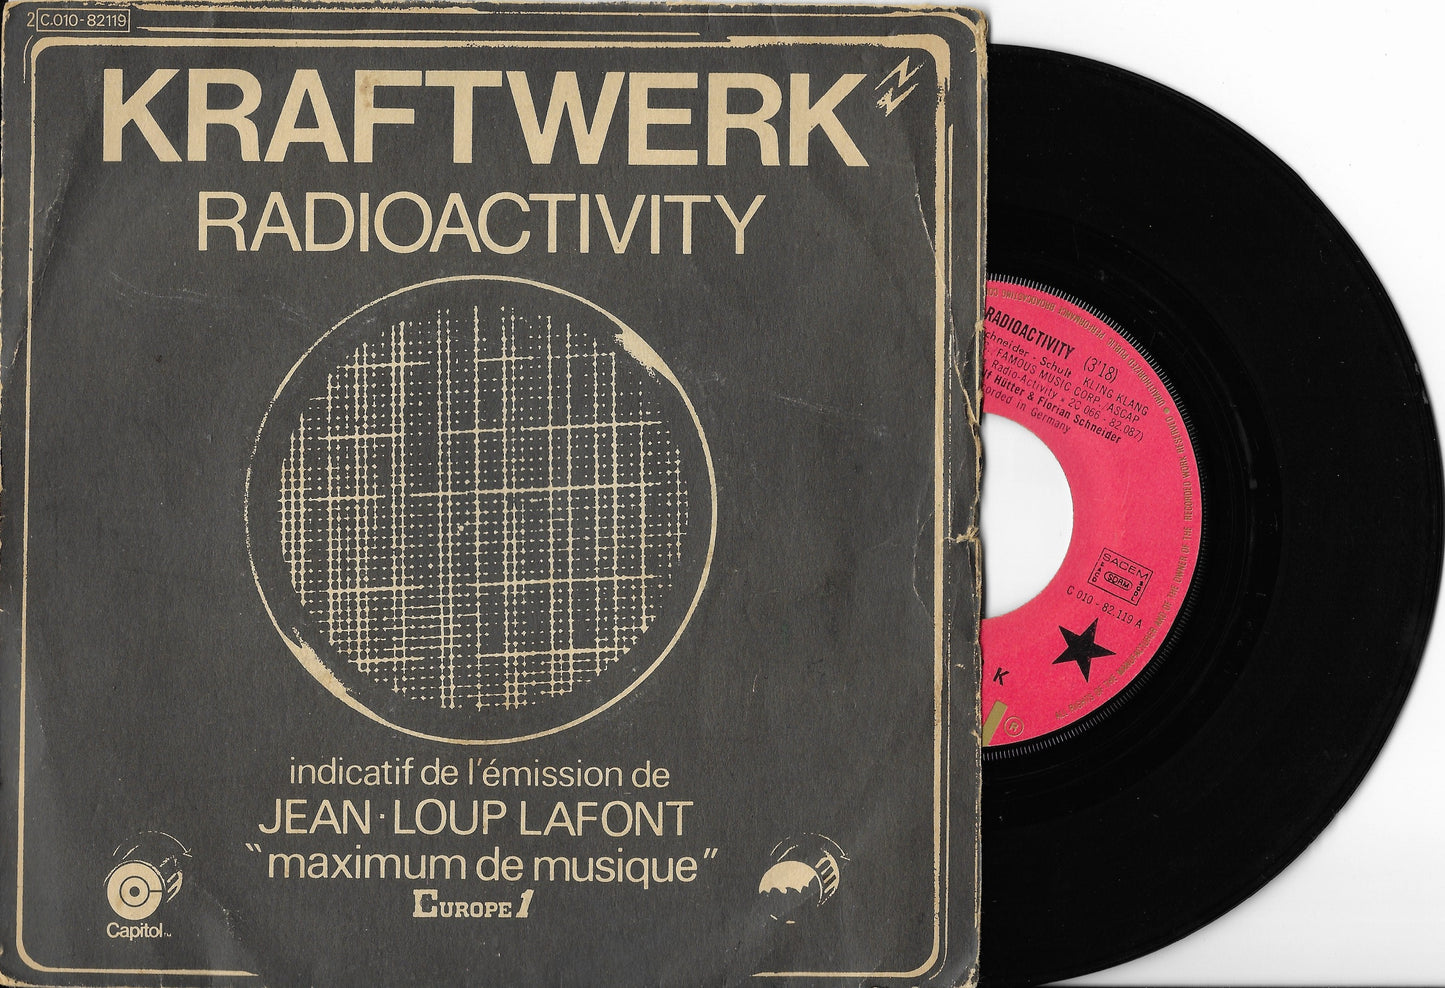 KRAFTWERK - Radioactivity